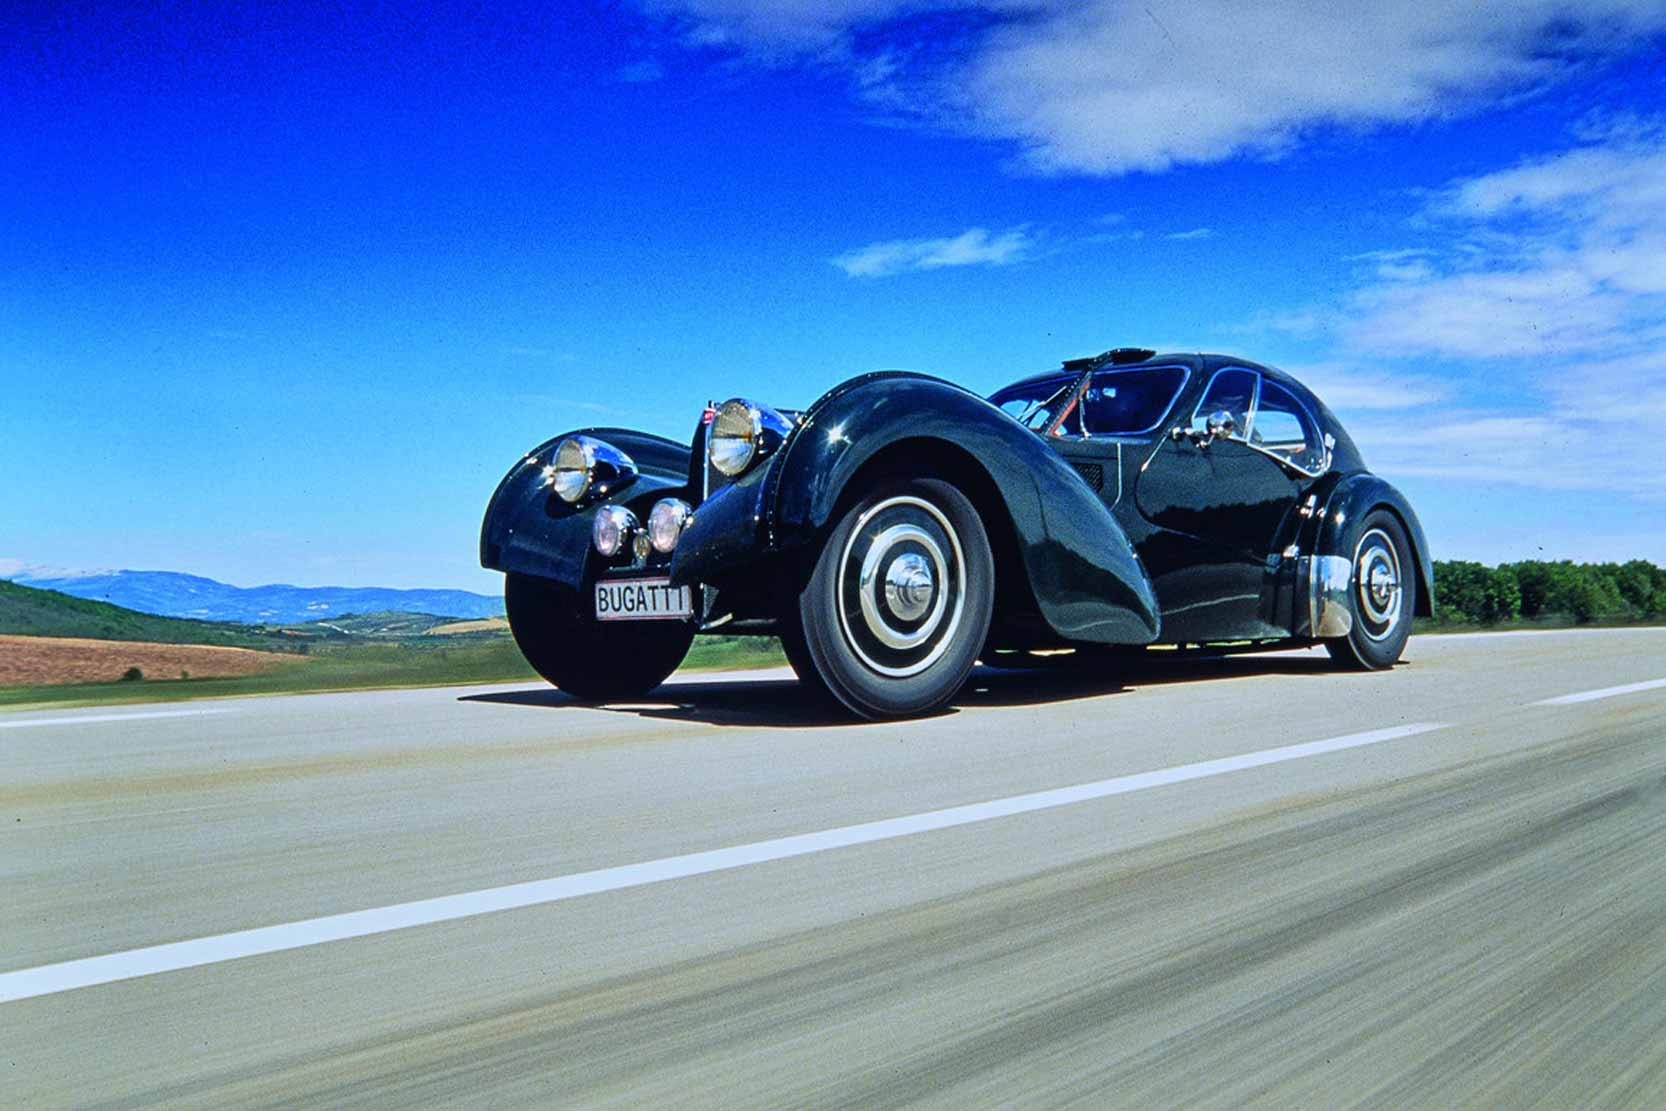 Image principale de l'actu: Bugatti type 57sc atlantic la laquo classique des annees 1920 30 raquo 